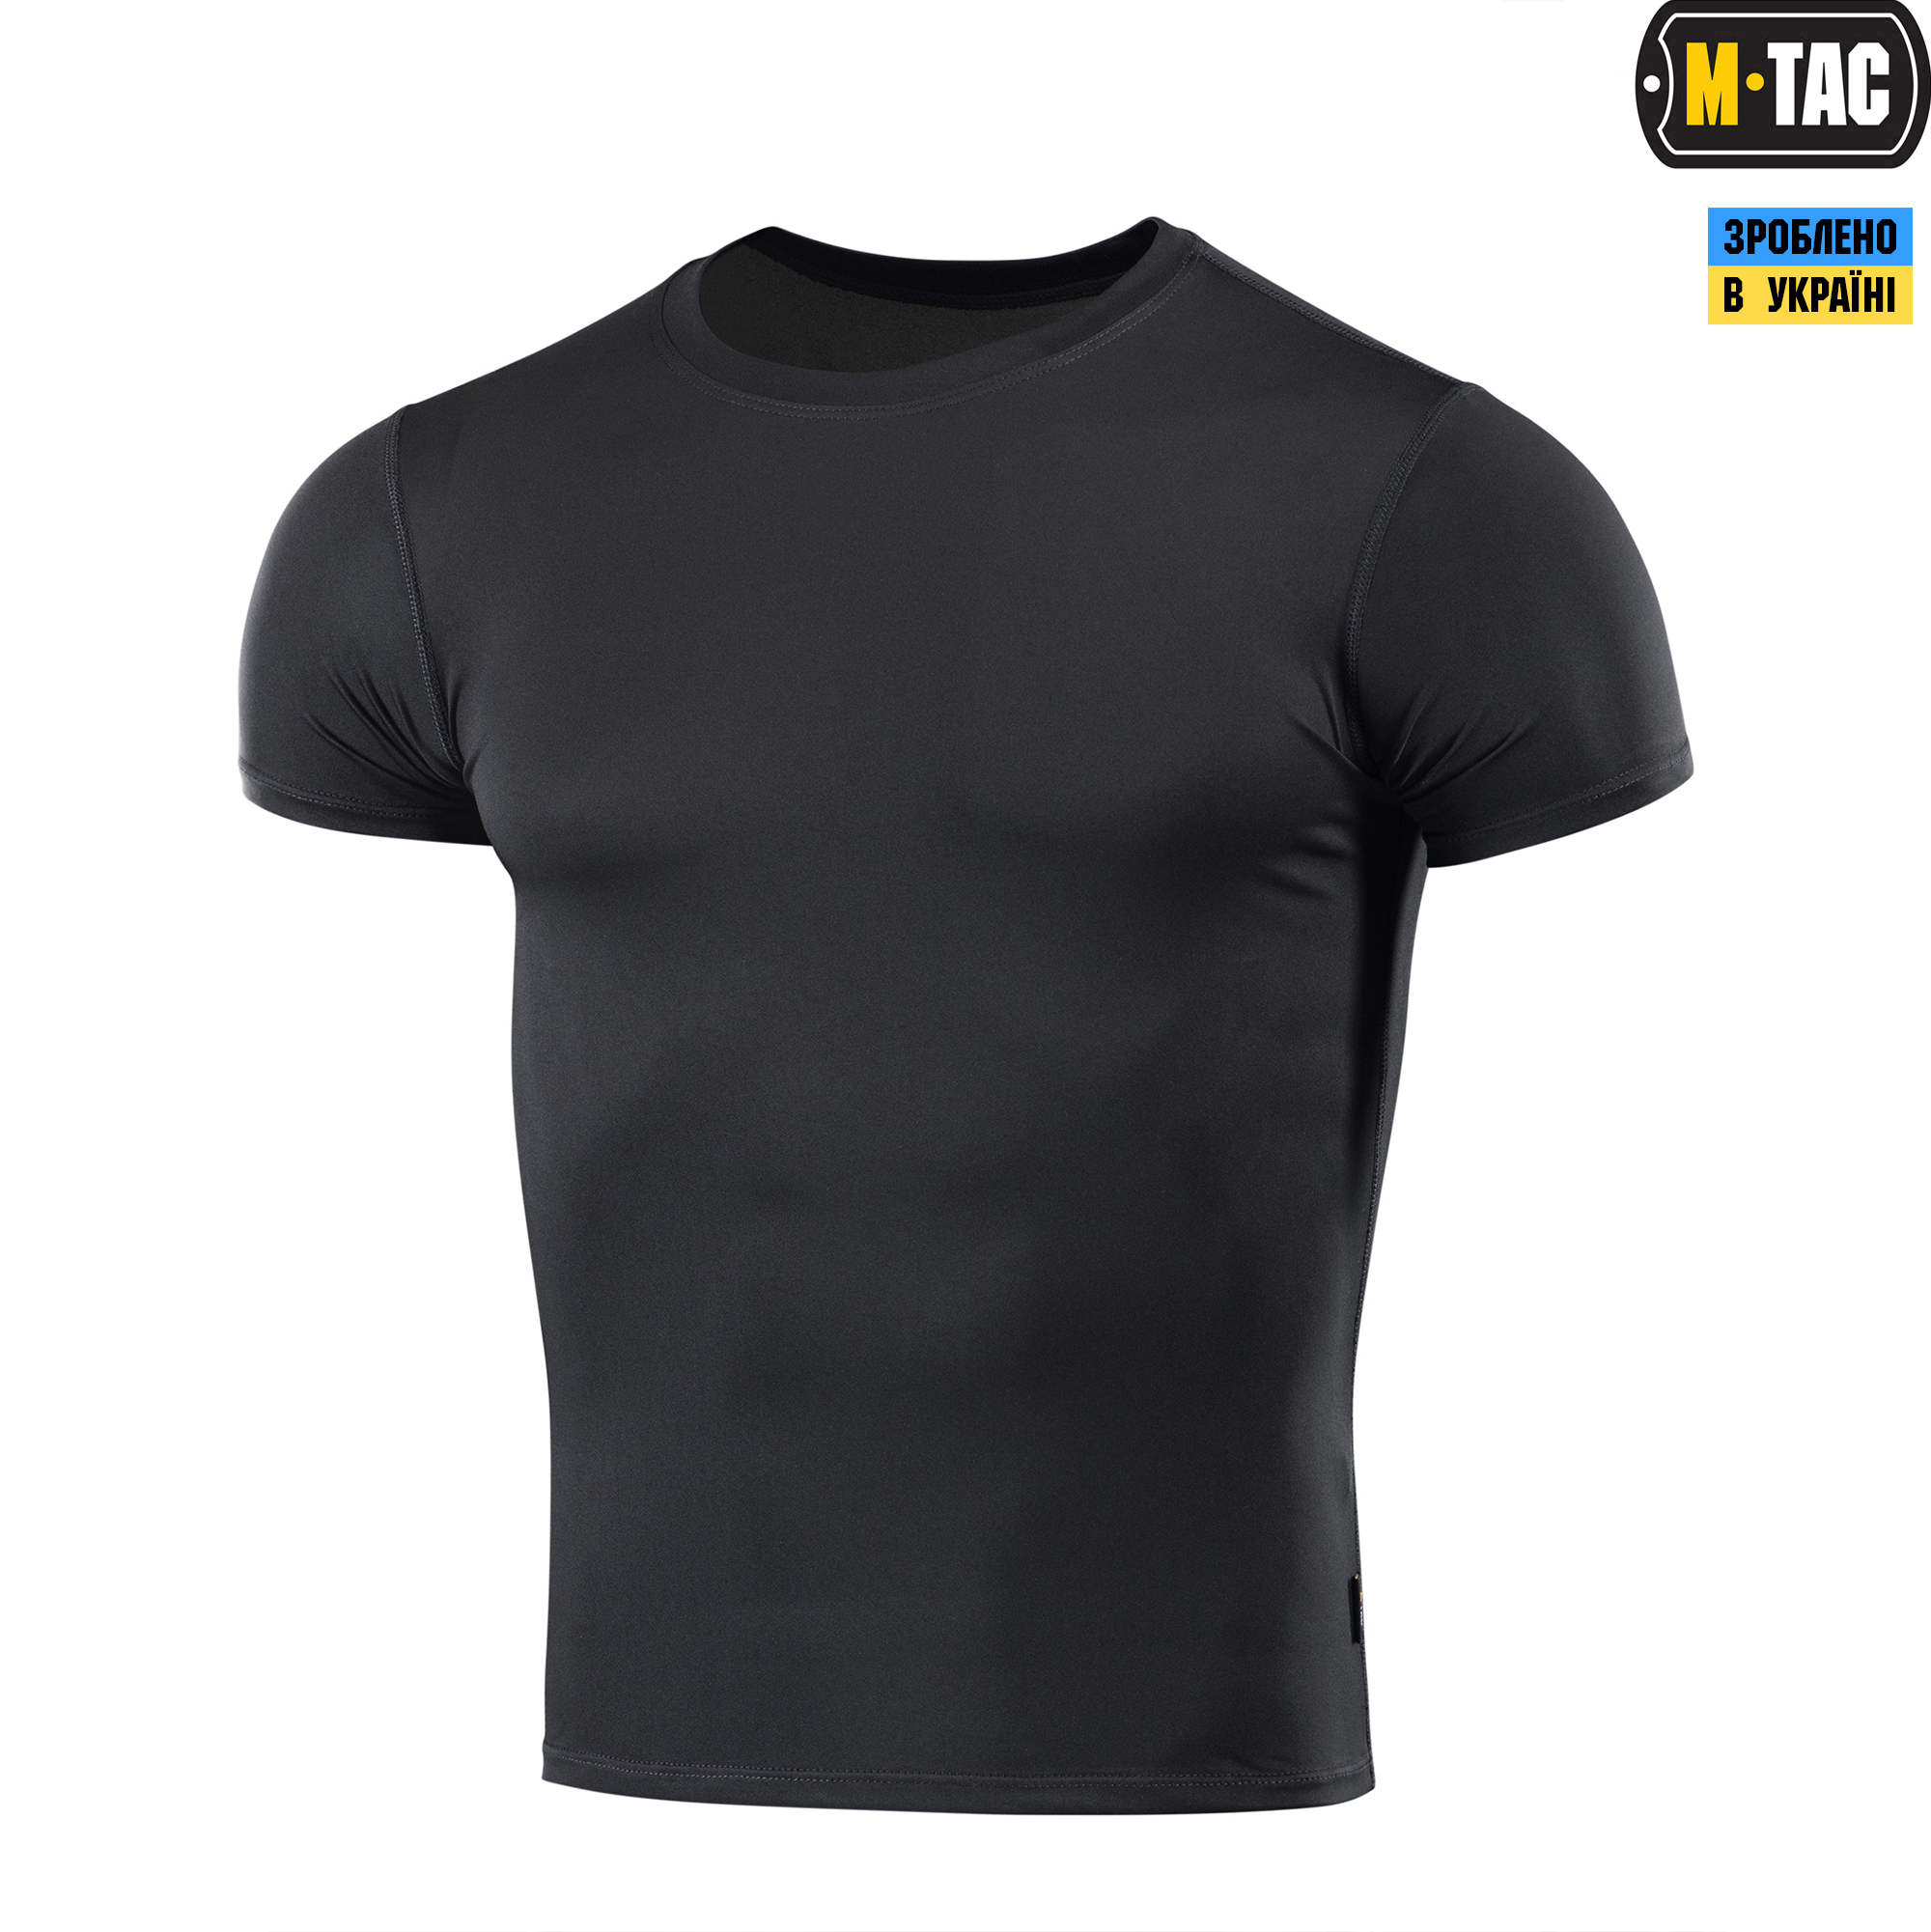 M-Tac футболка CoolPass Black